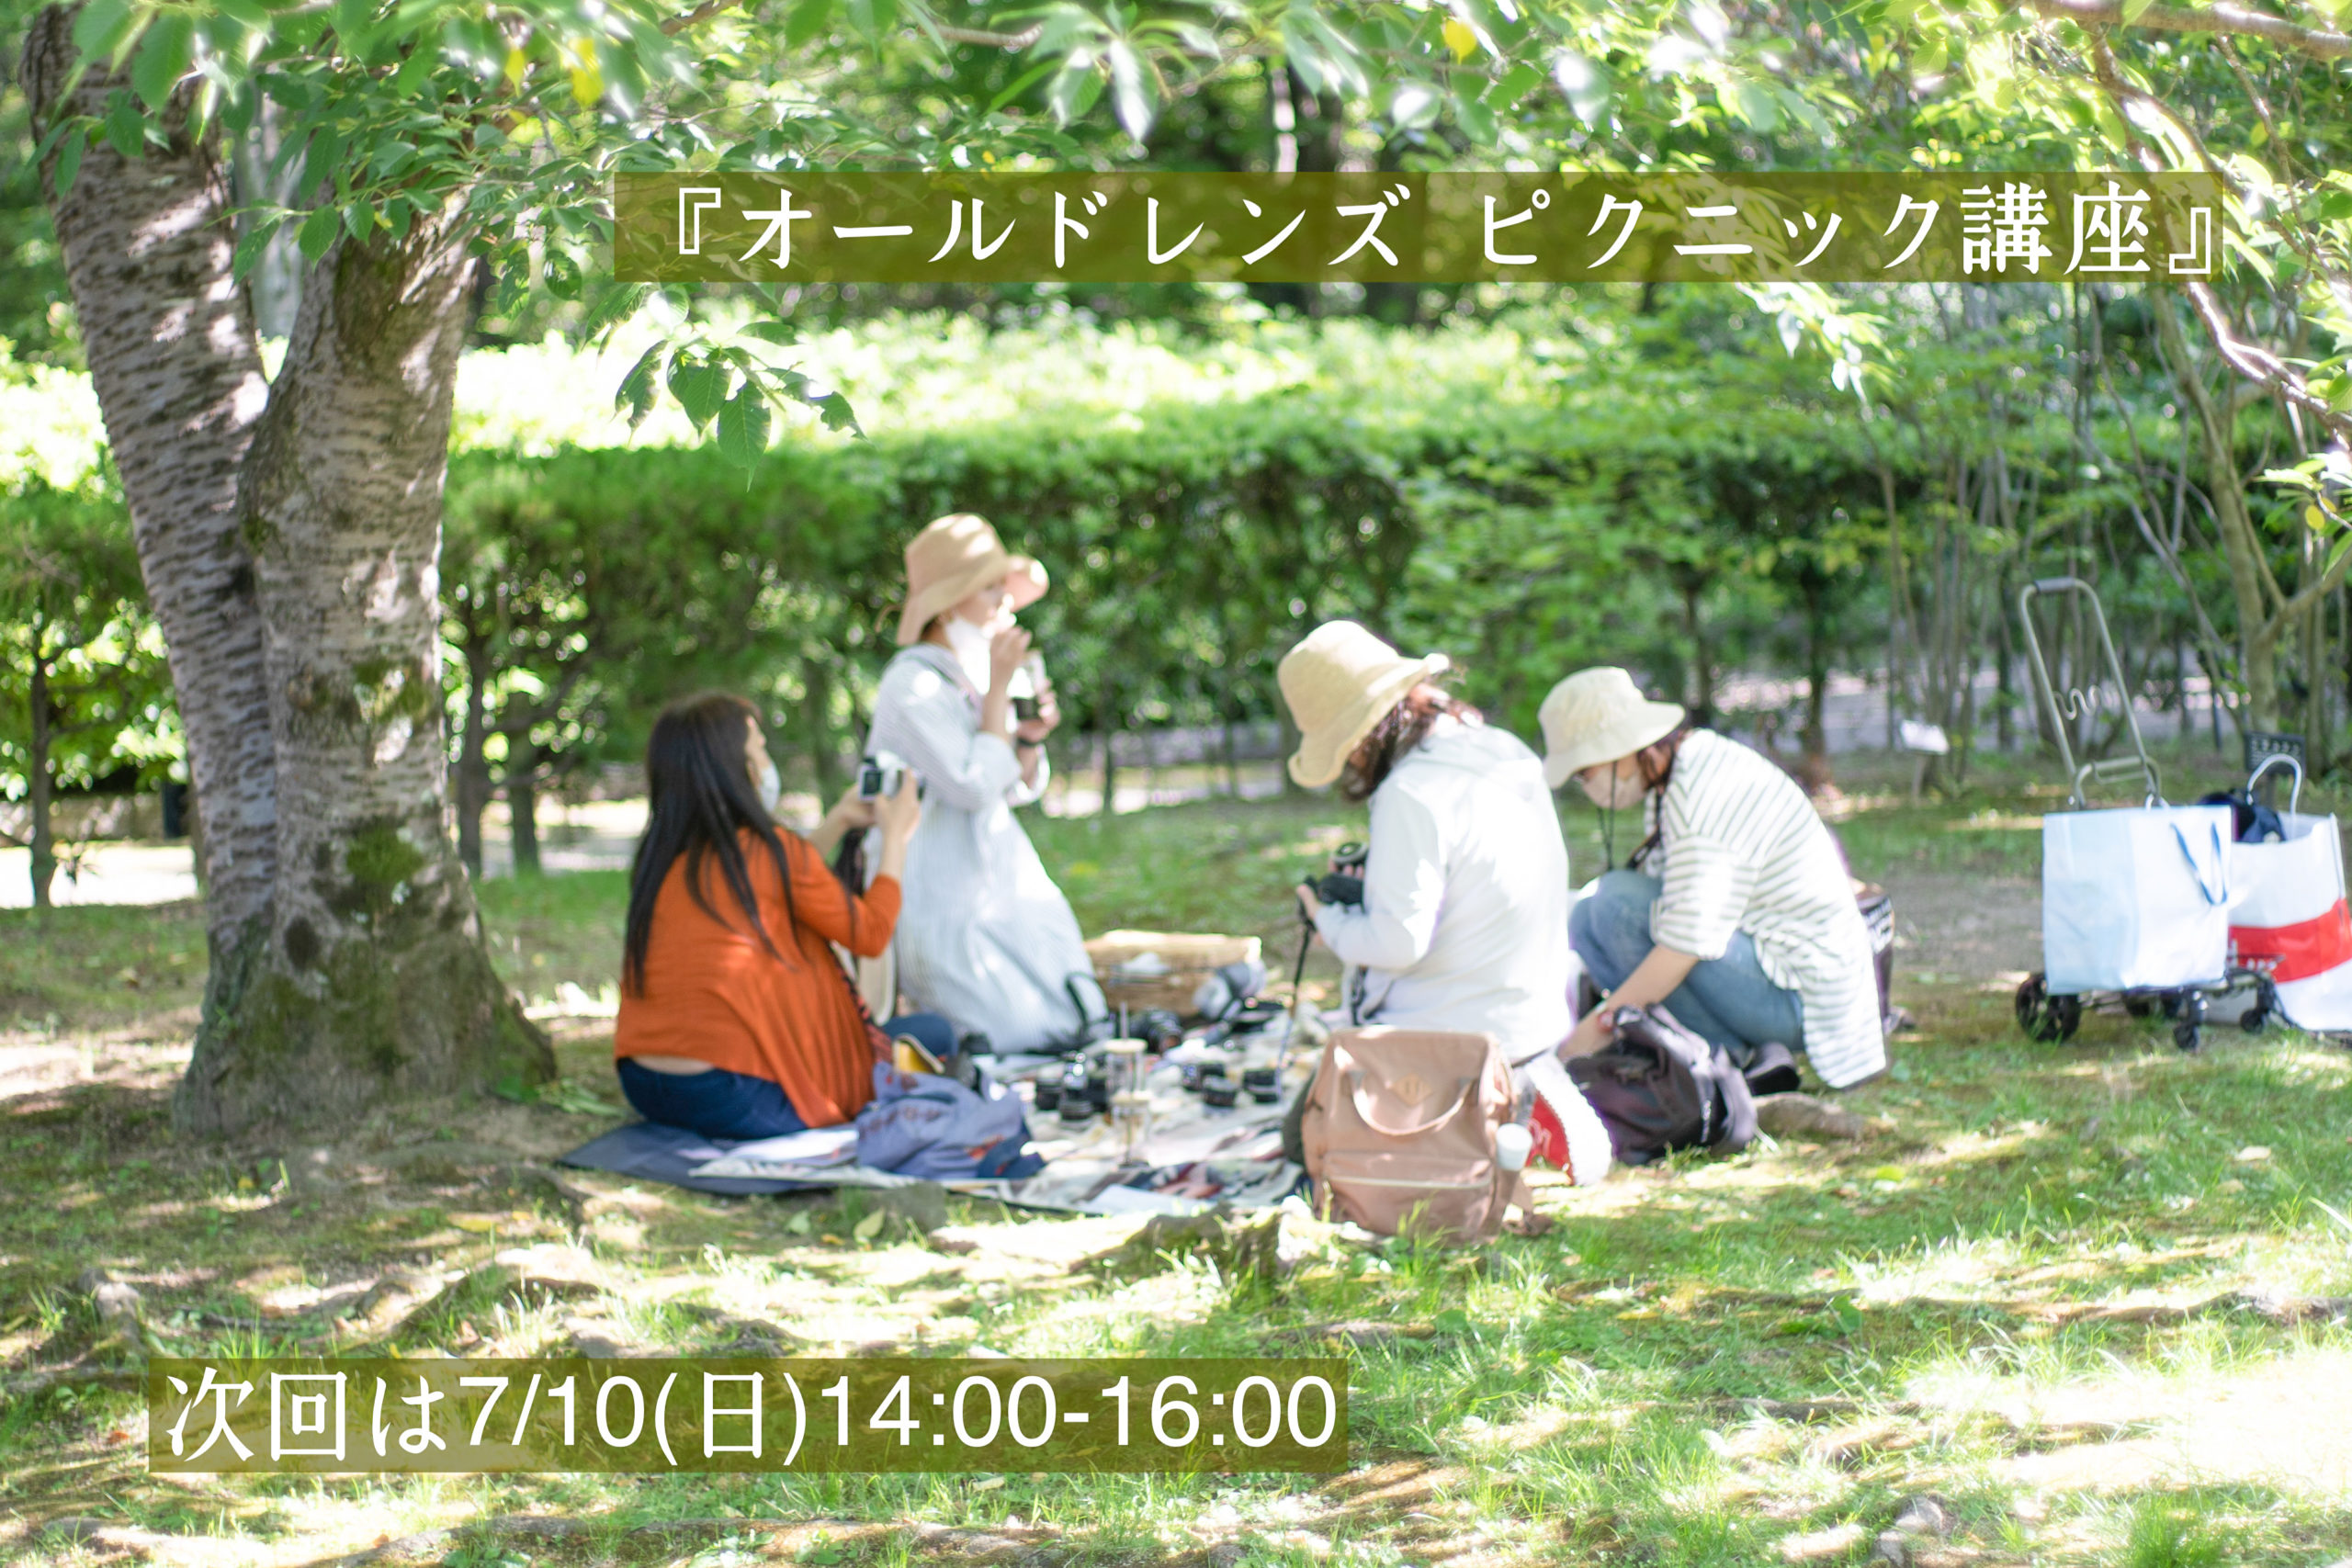 ◆『1day講座』7/10(日)14:00~16:00【楽しい！オールドレンズピクニック講座】